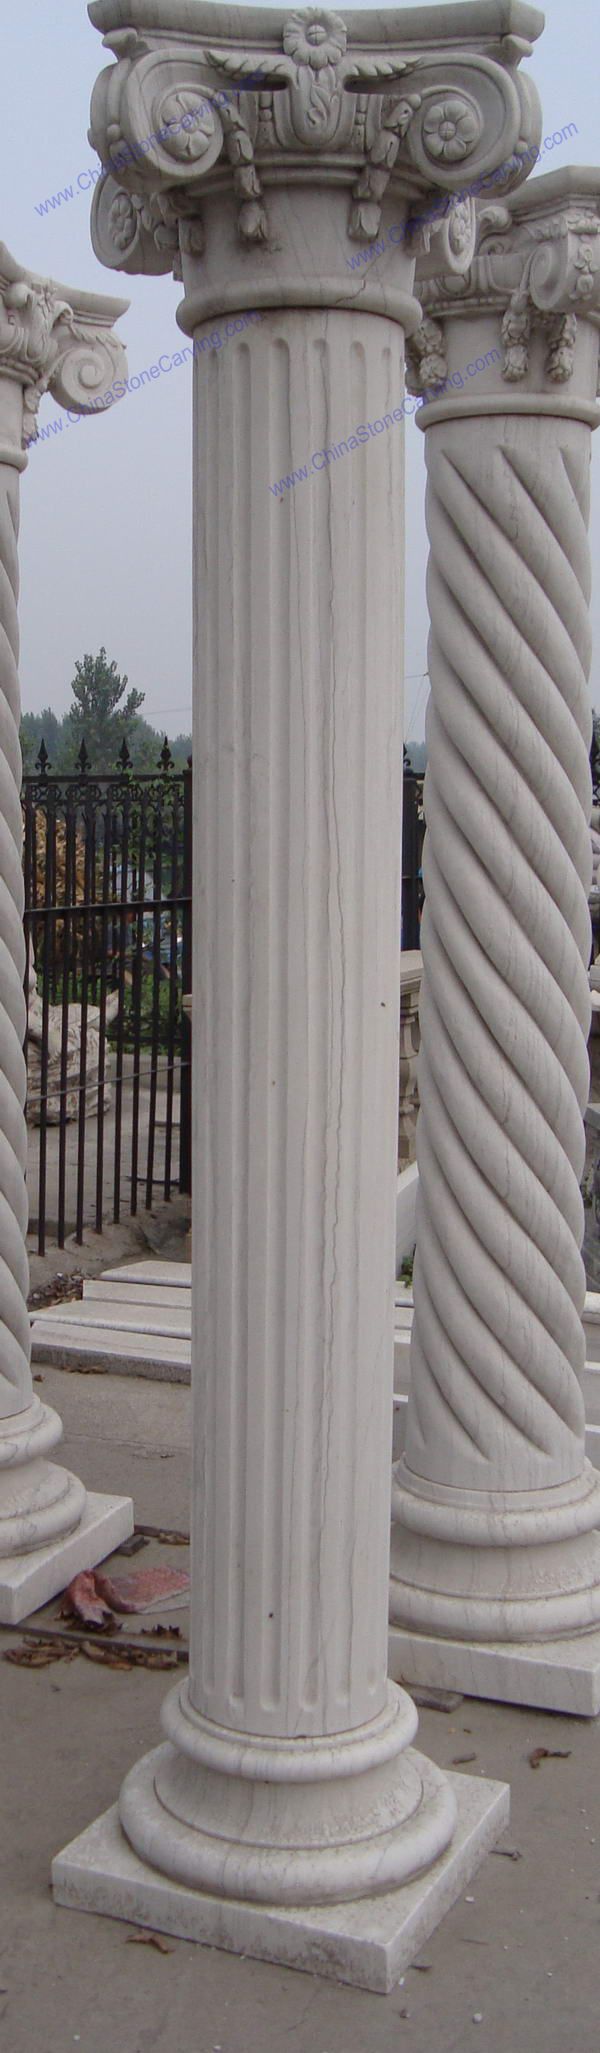 Stone Roman columns